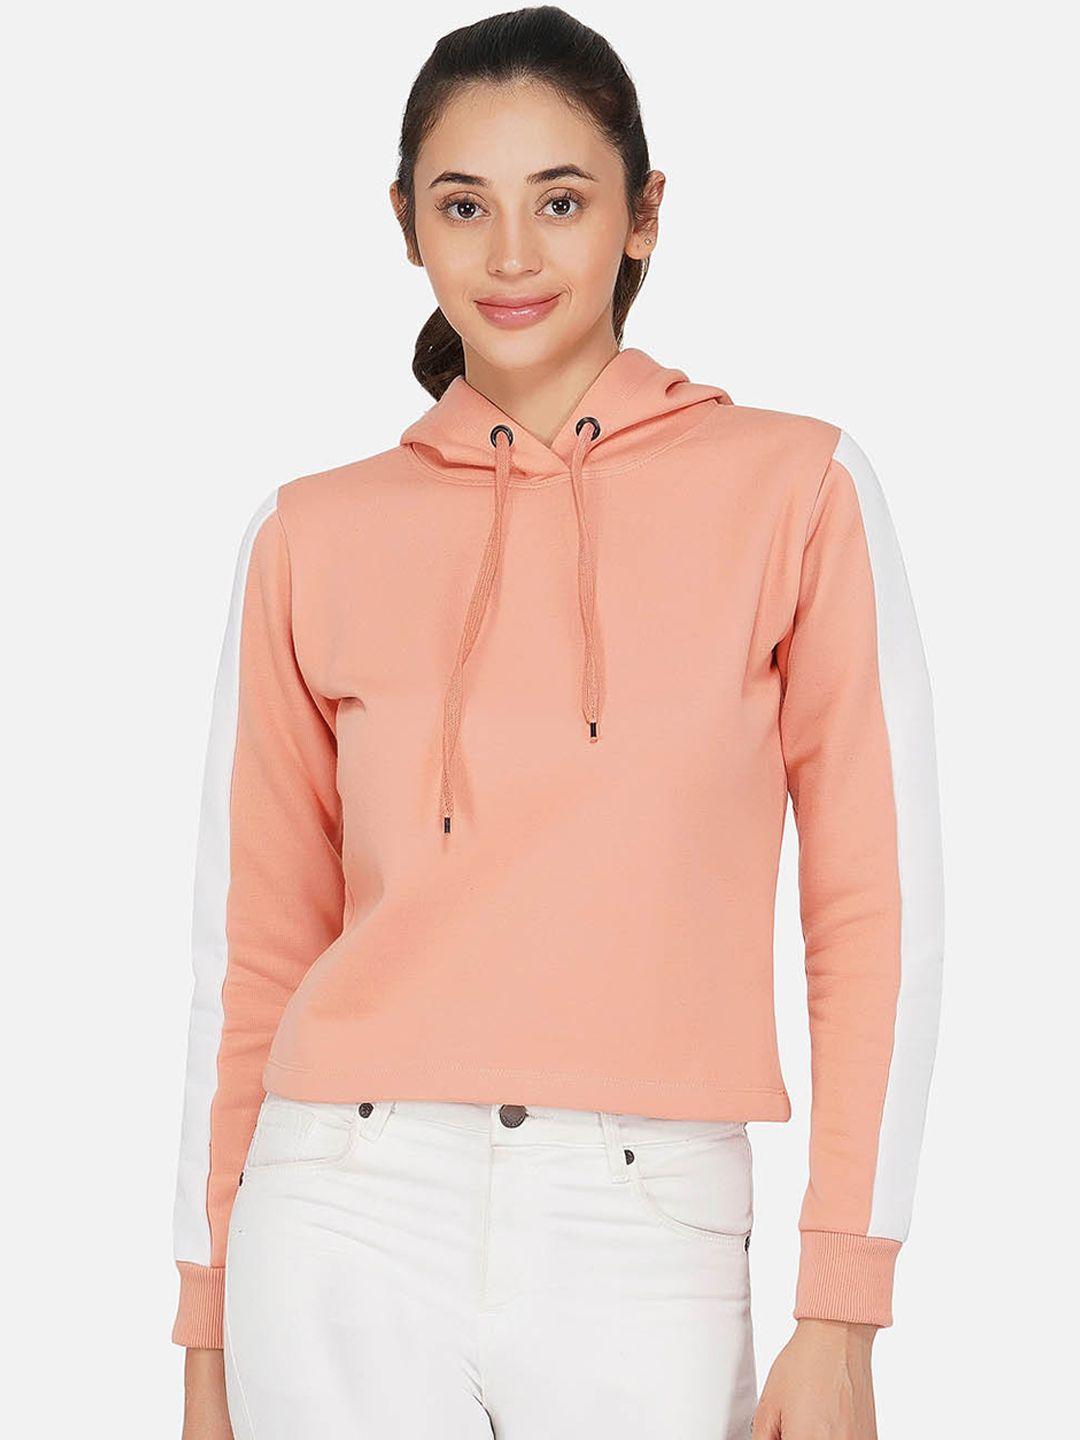 neu look fashion women peach-coloured sweatshirt